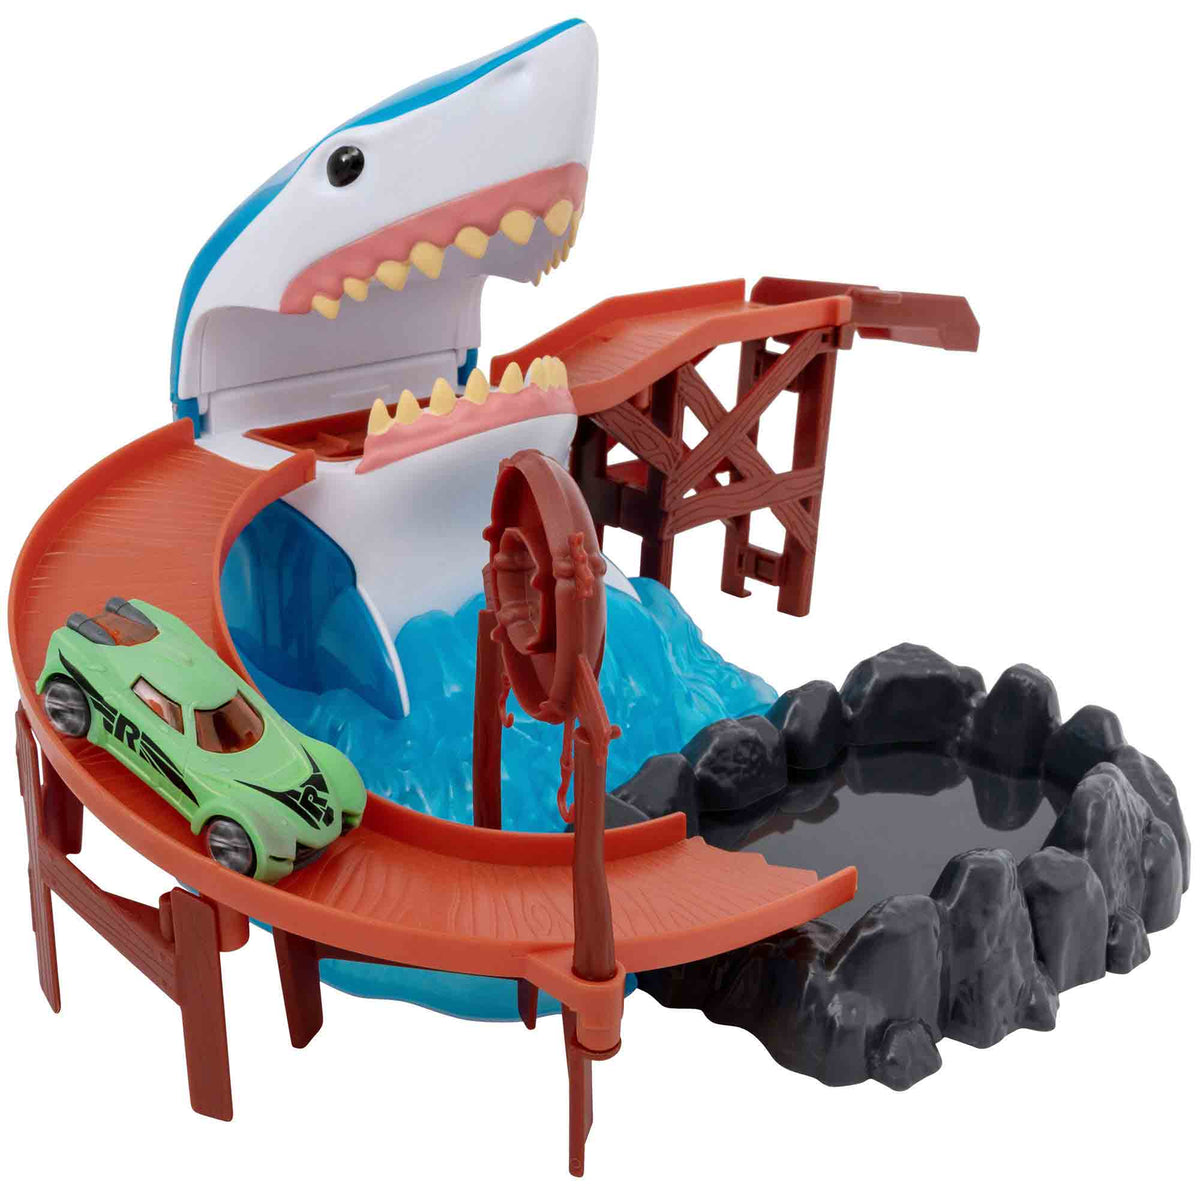 Teamsterz Colour Change Shark Bite Play Set - With 1 Die-Cast Car